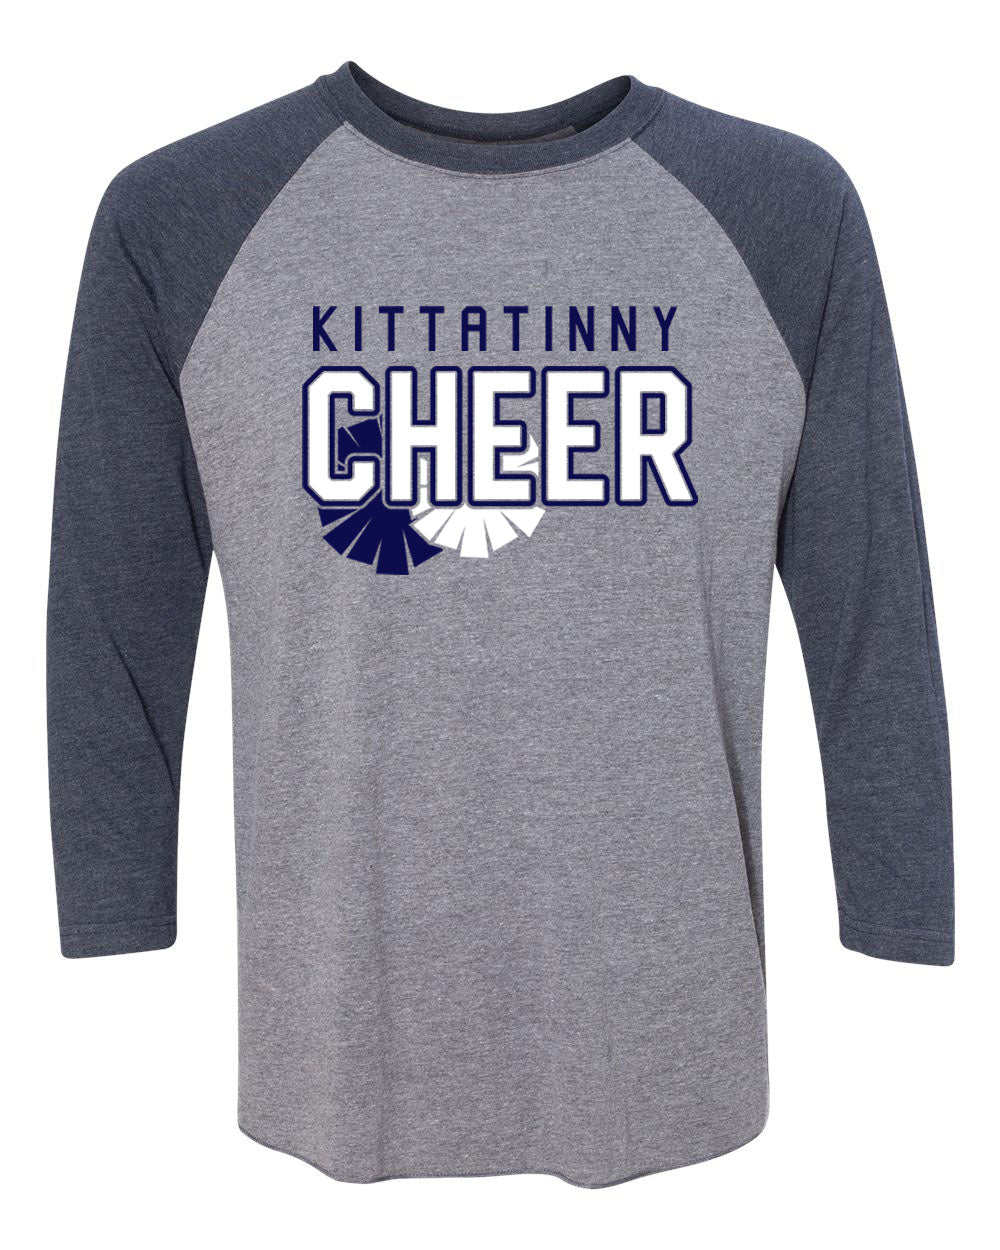 Kittatinny Cheer Design 4 raglan shirt